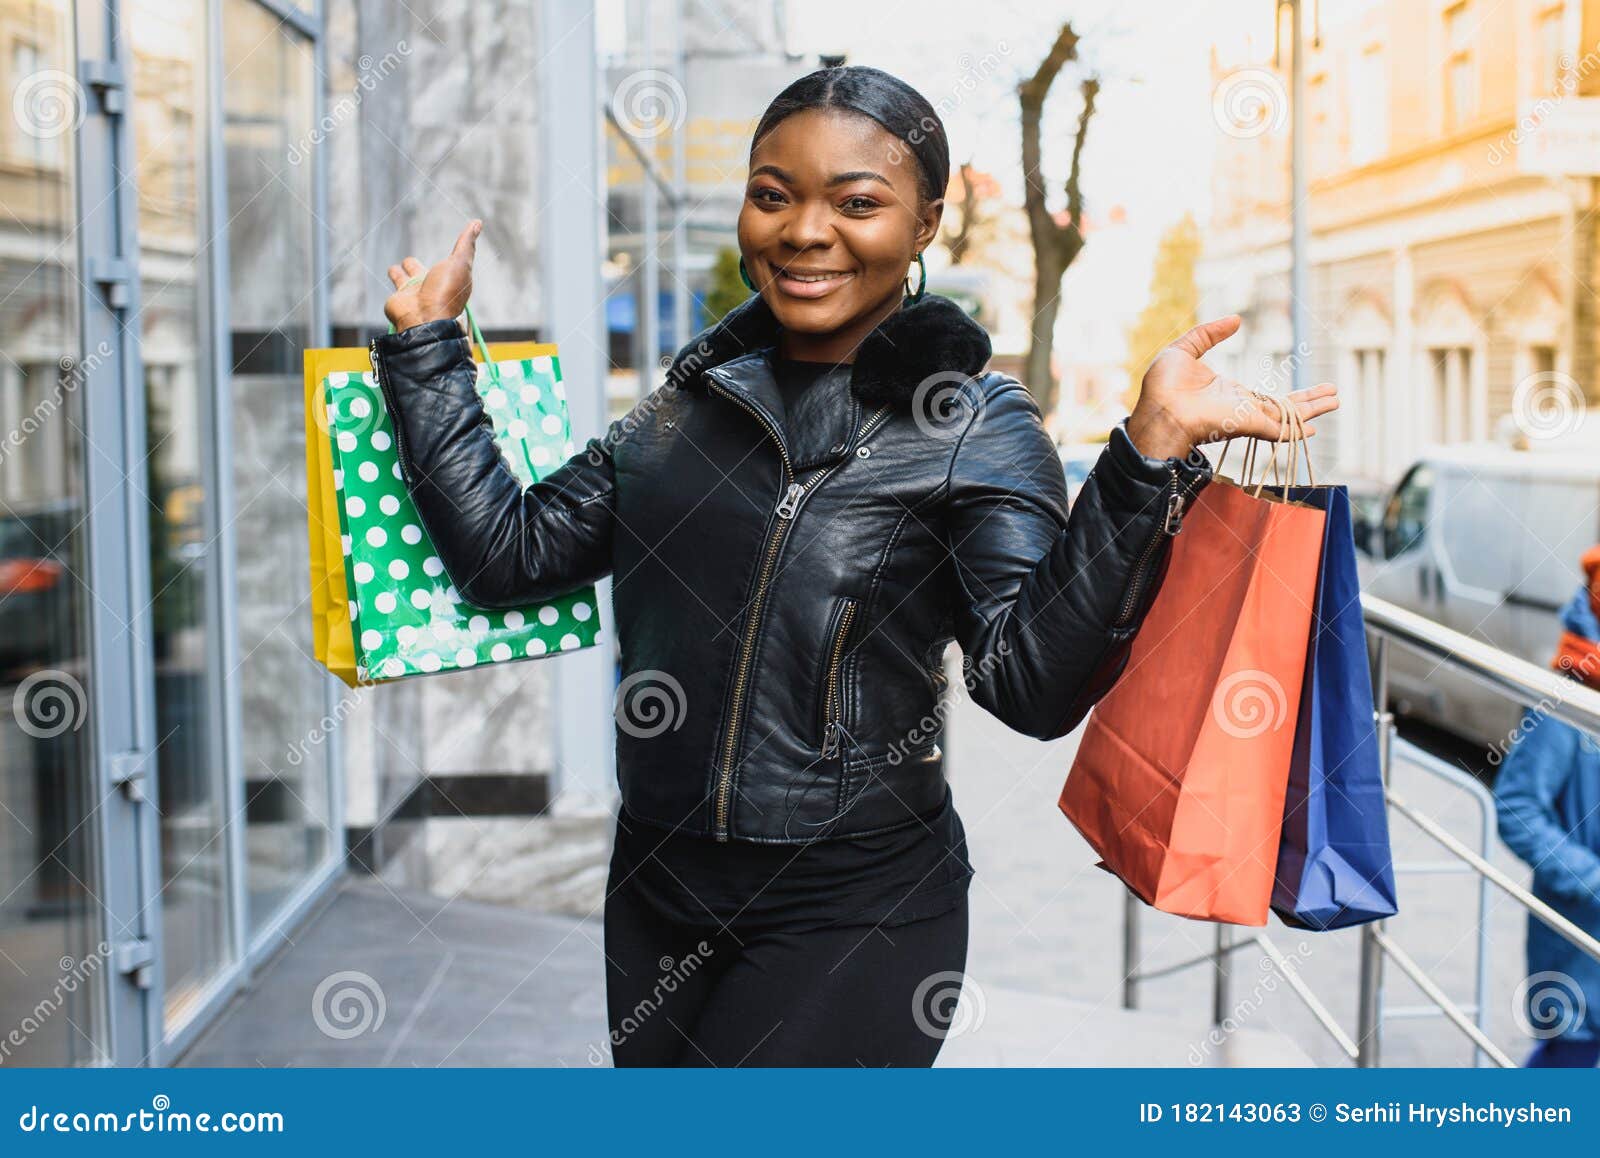 African American Woman Shopping. Seasonal Discounts Stock Image - Image ...